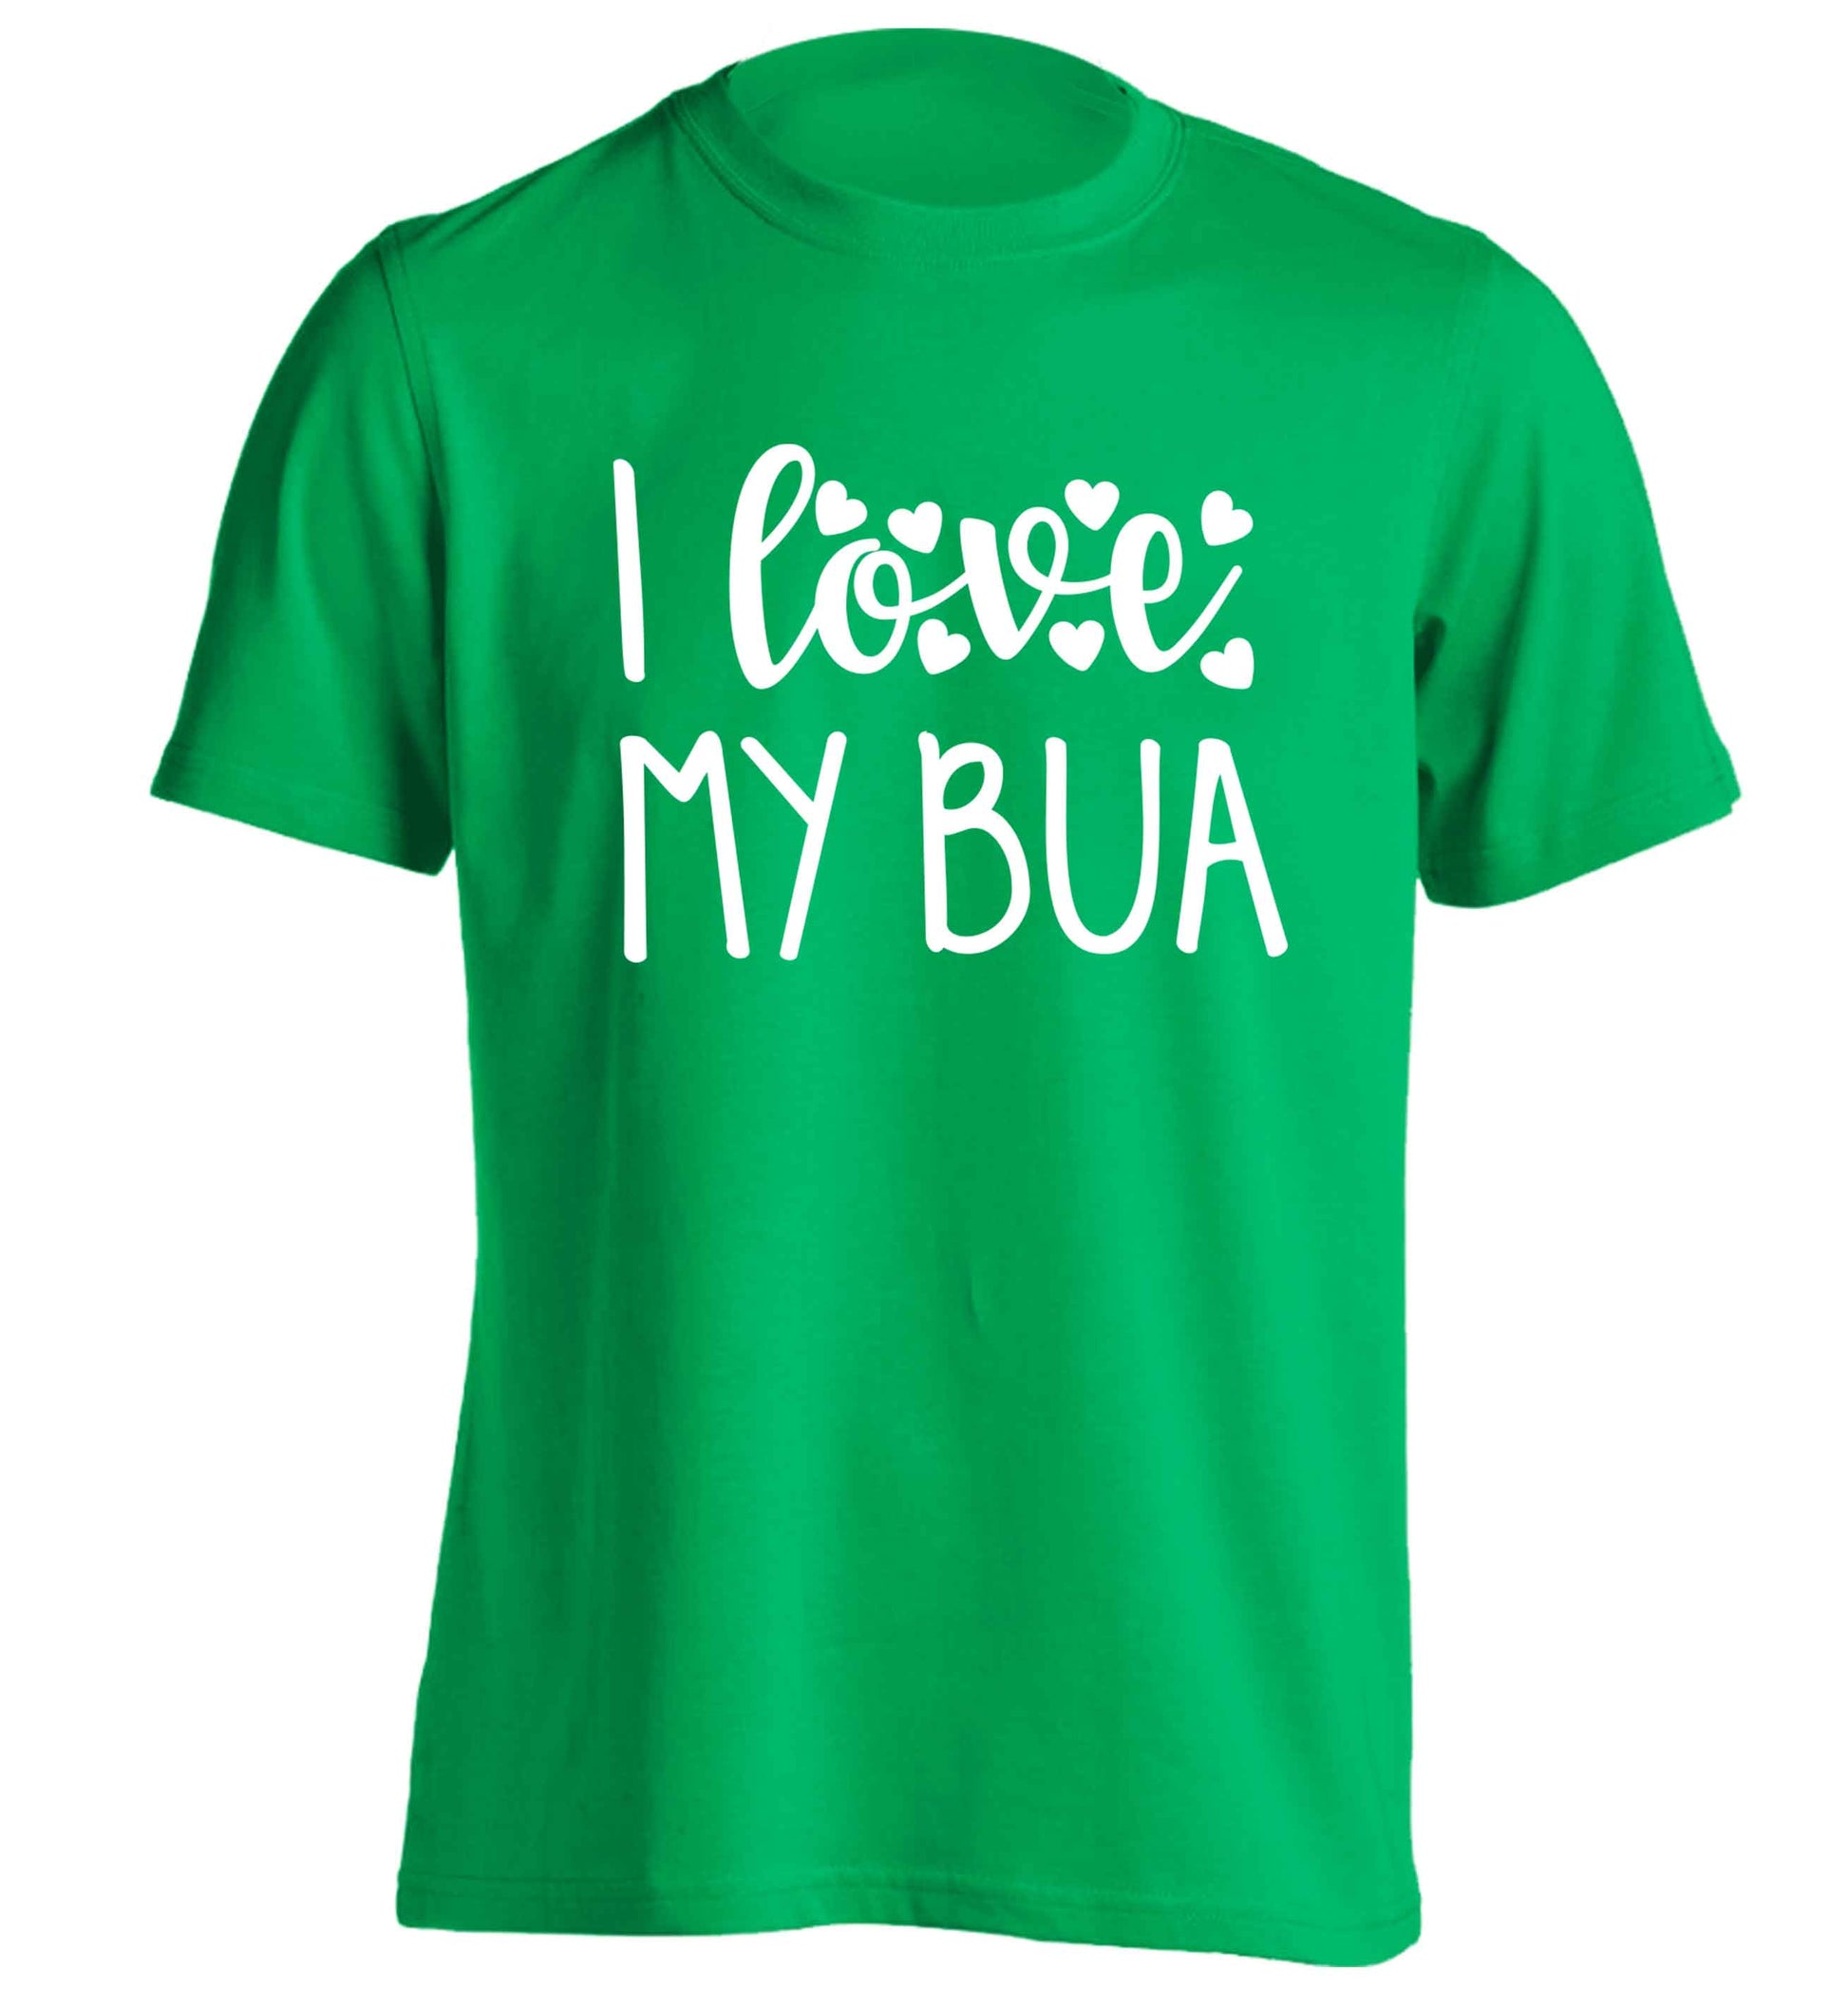 I love my bua adults unisex green Tshirt 2XL